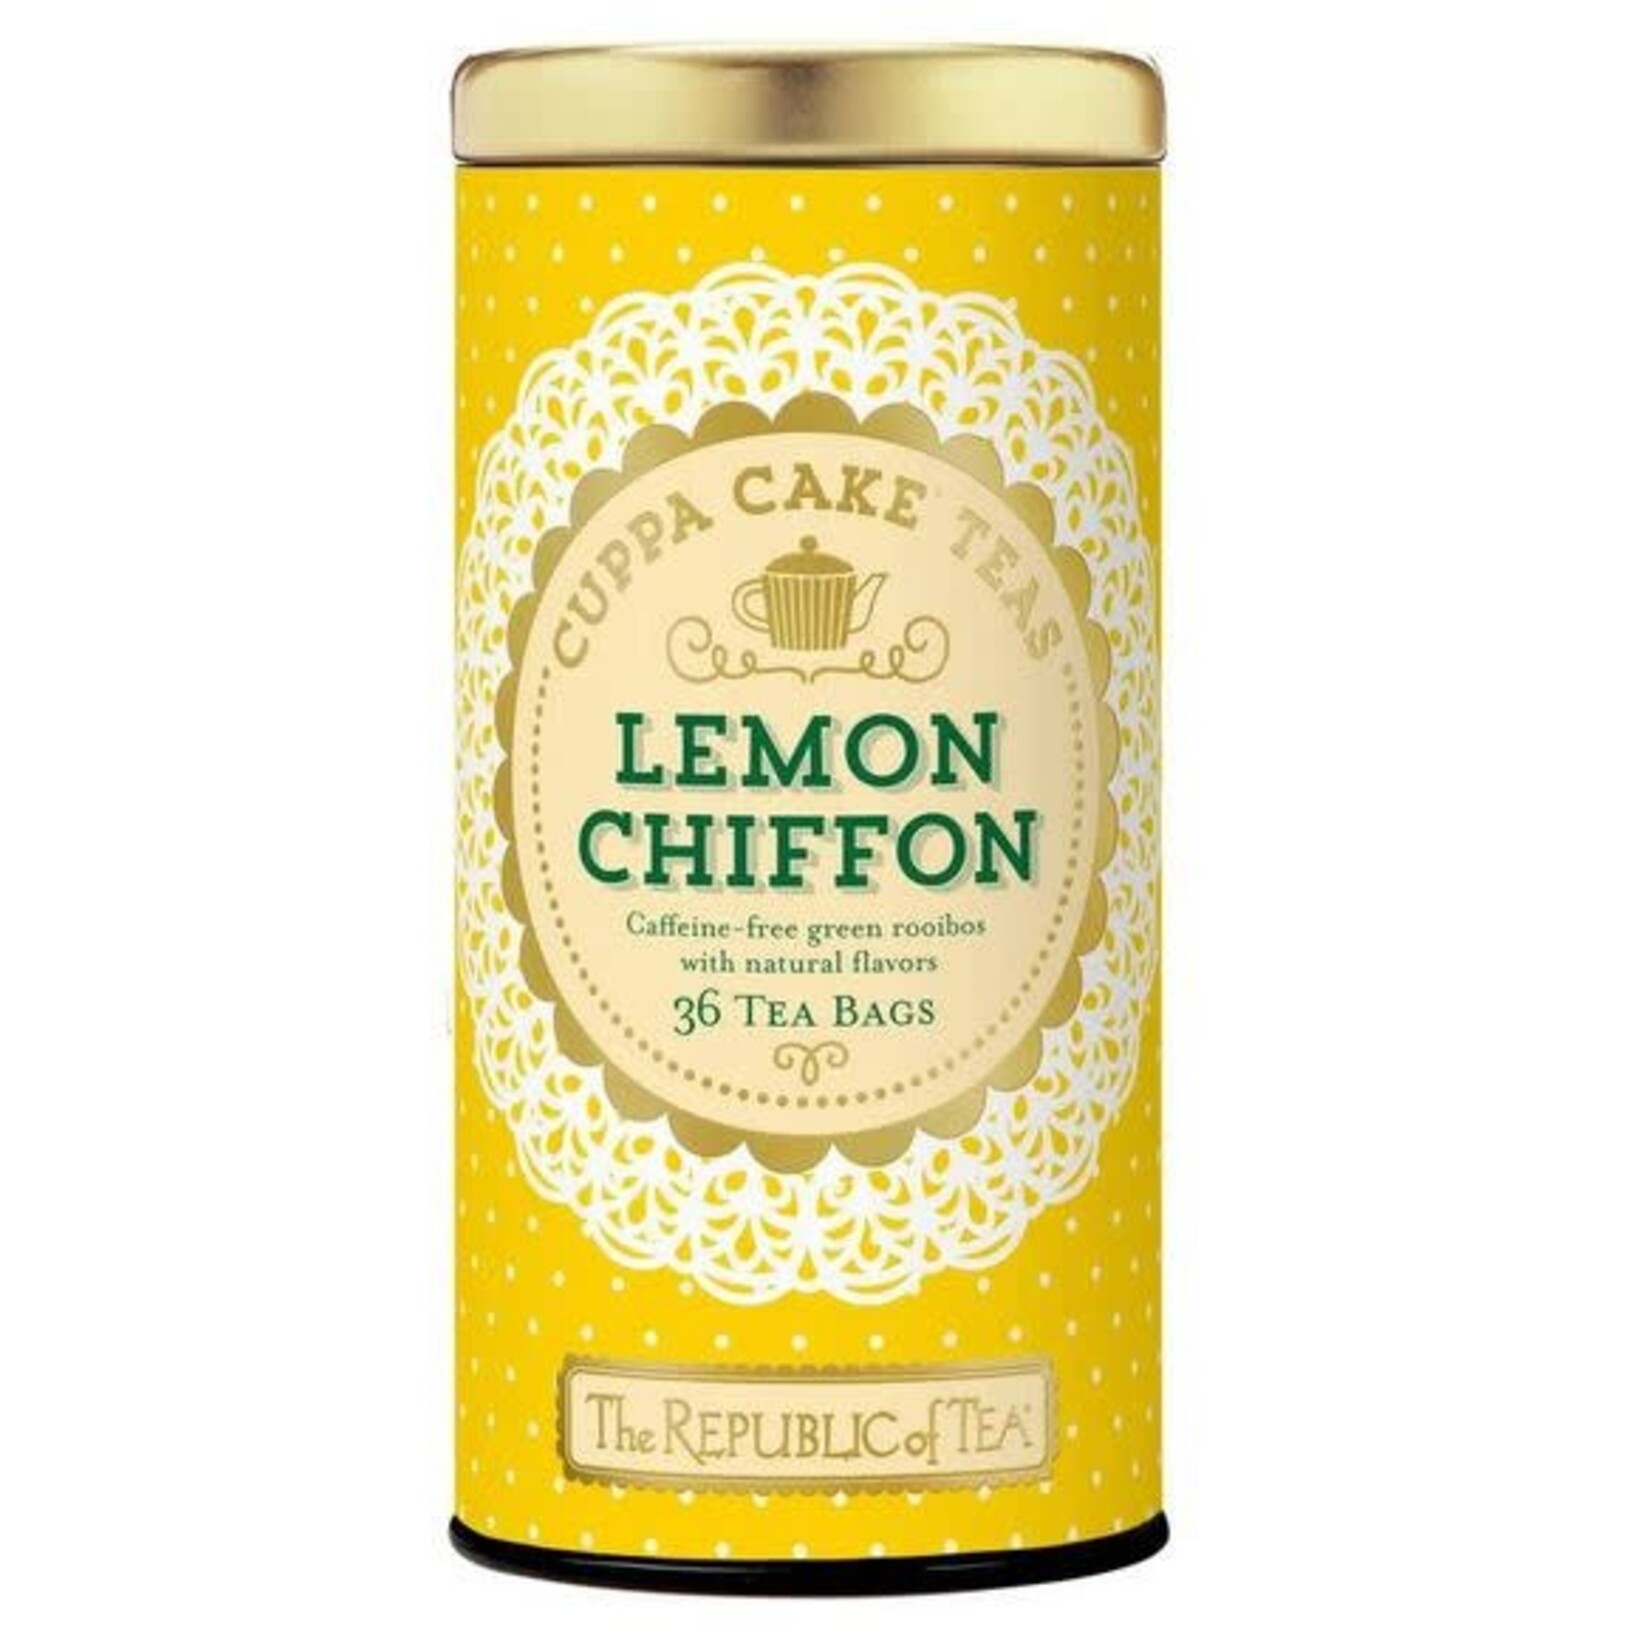 The Republic of Tea Tea: Lemon Chiffon Cuppa Cake Tea (36 Tea Bags)